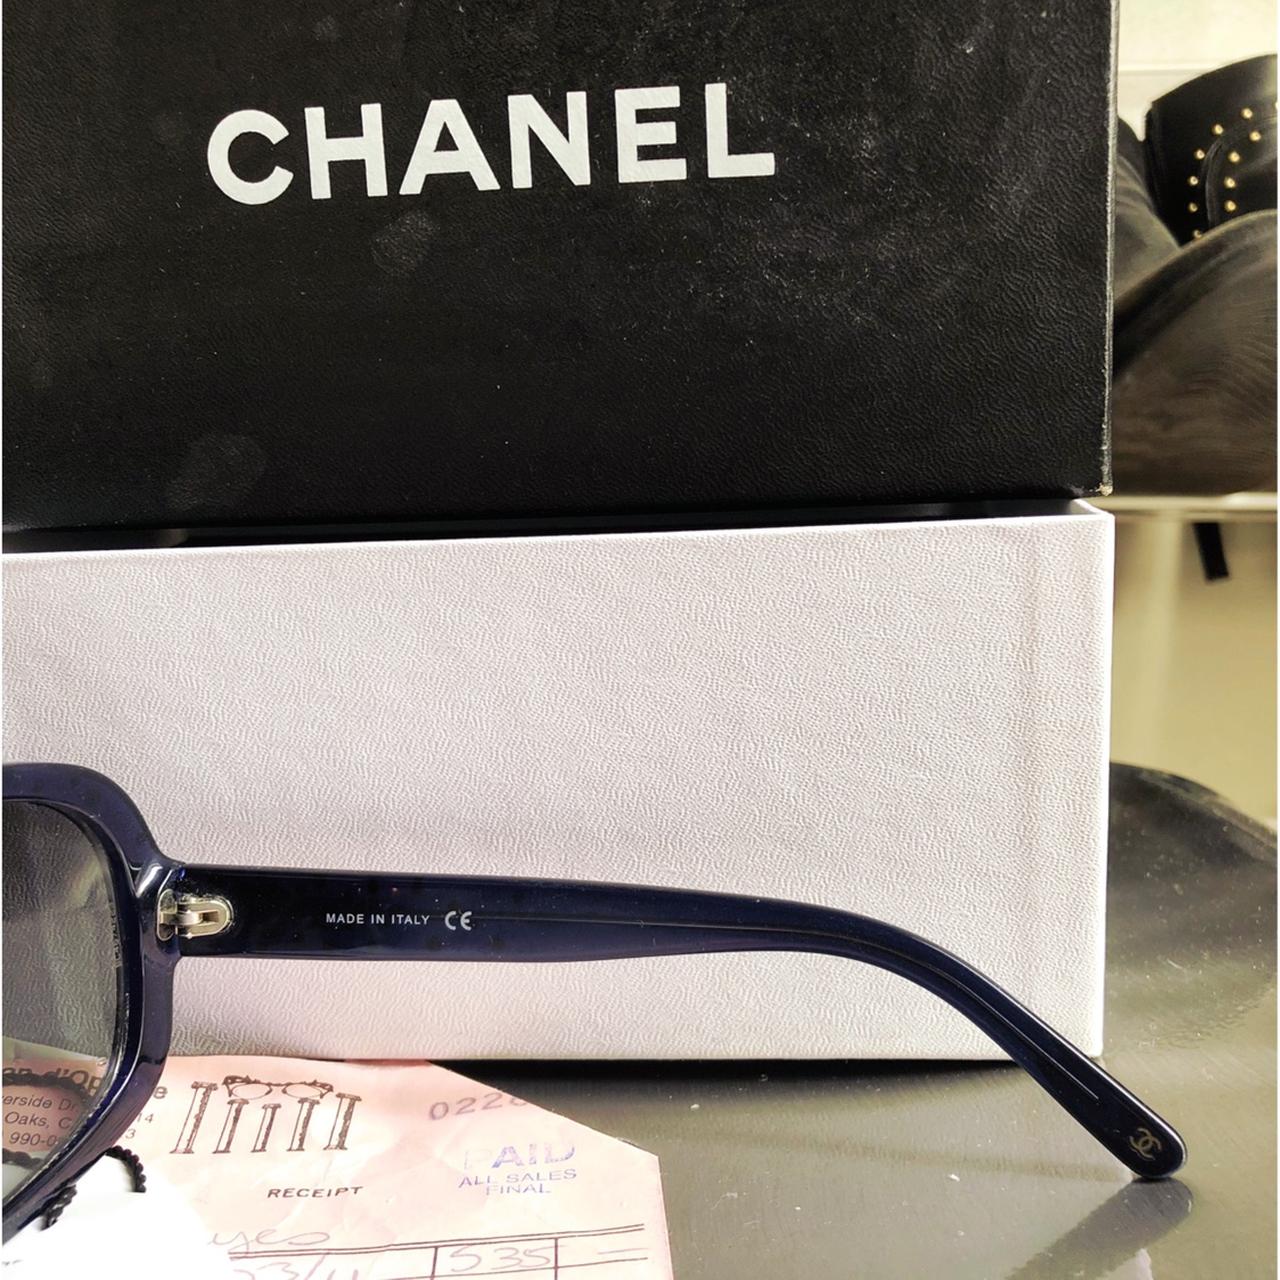 Chanel Studded Sunglasses Color: midnight blue/blue - Depop